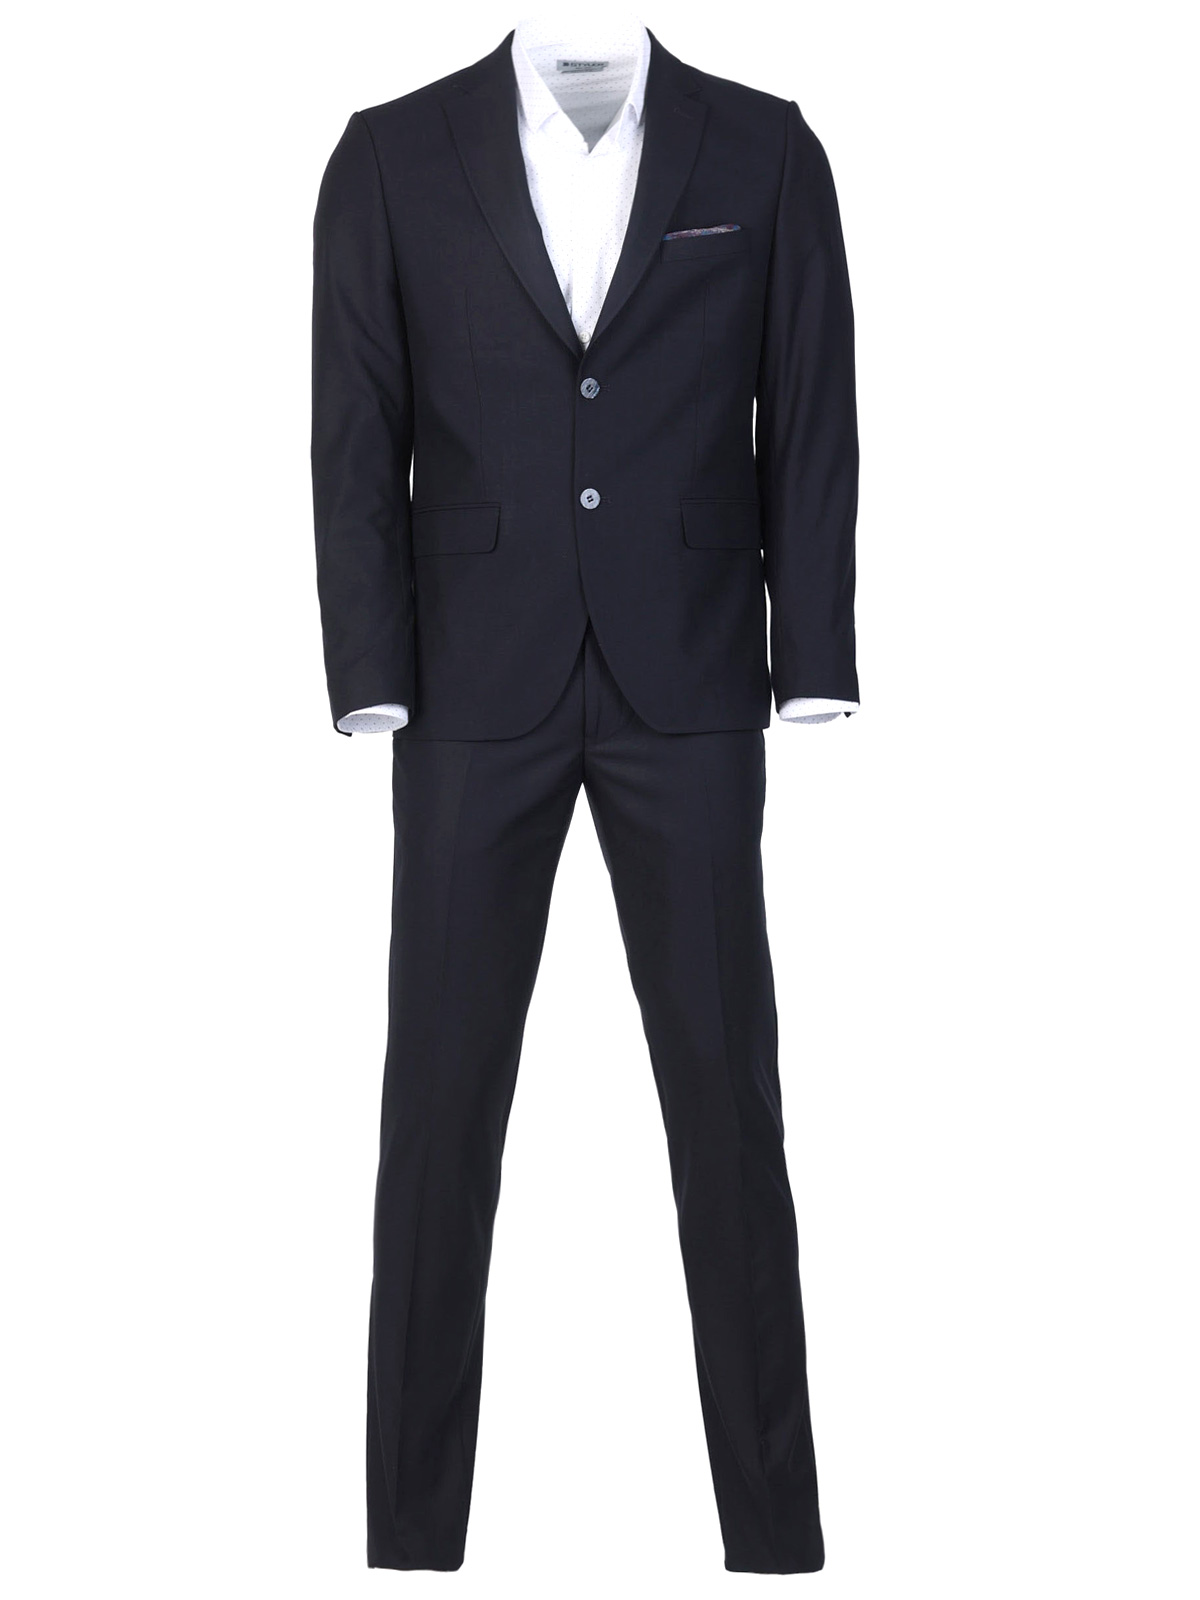 Elegant jacket in dark blue color - 64132 € 138.36 img4